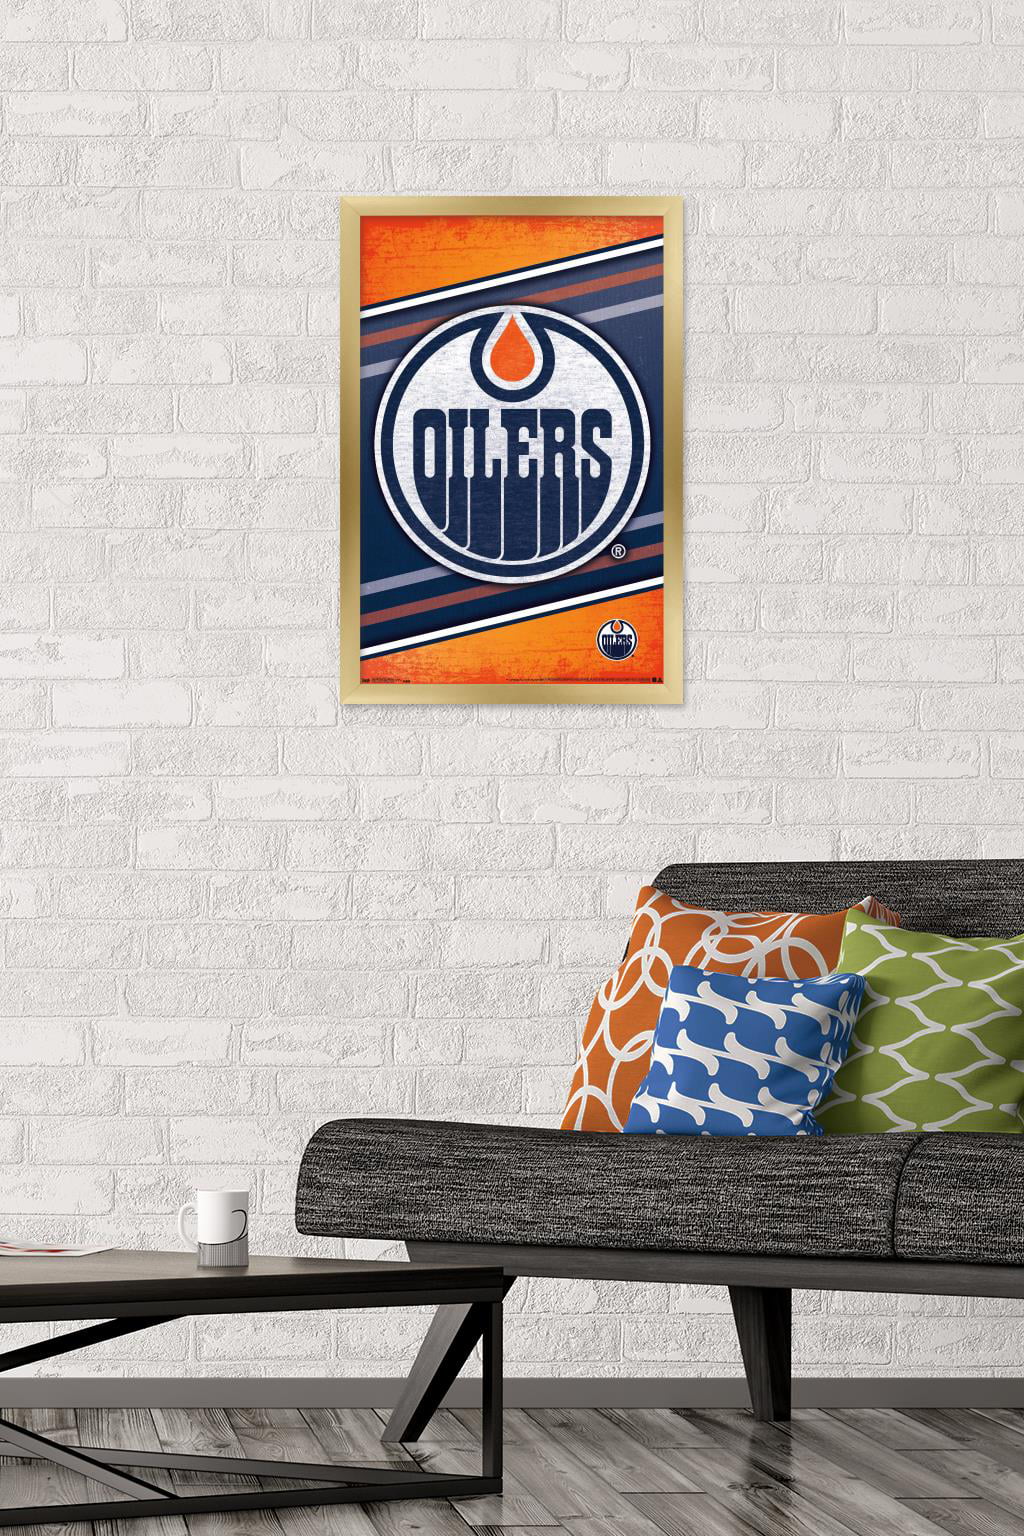 Edmonton Oilers Deluxe Framed Banner Collage